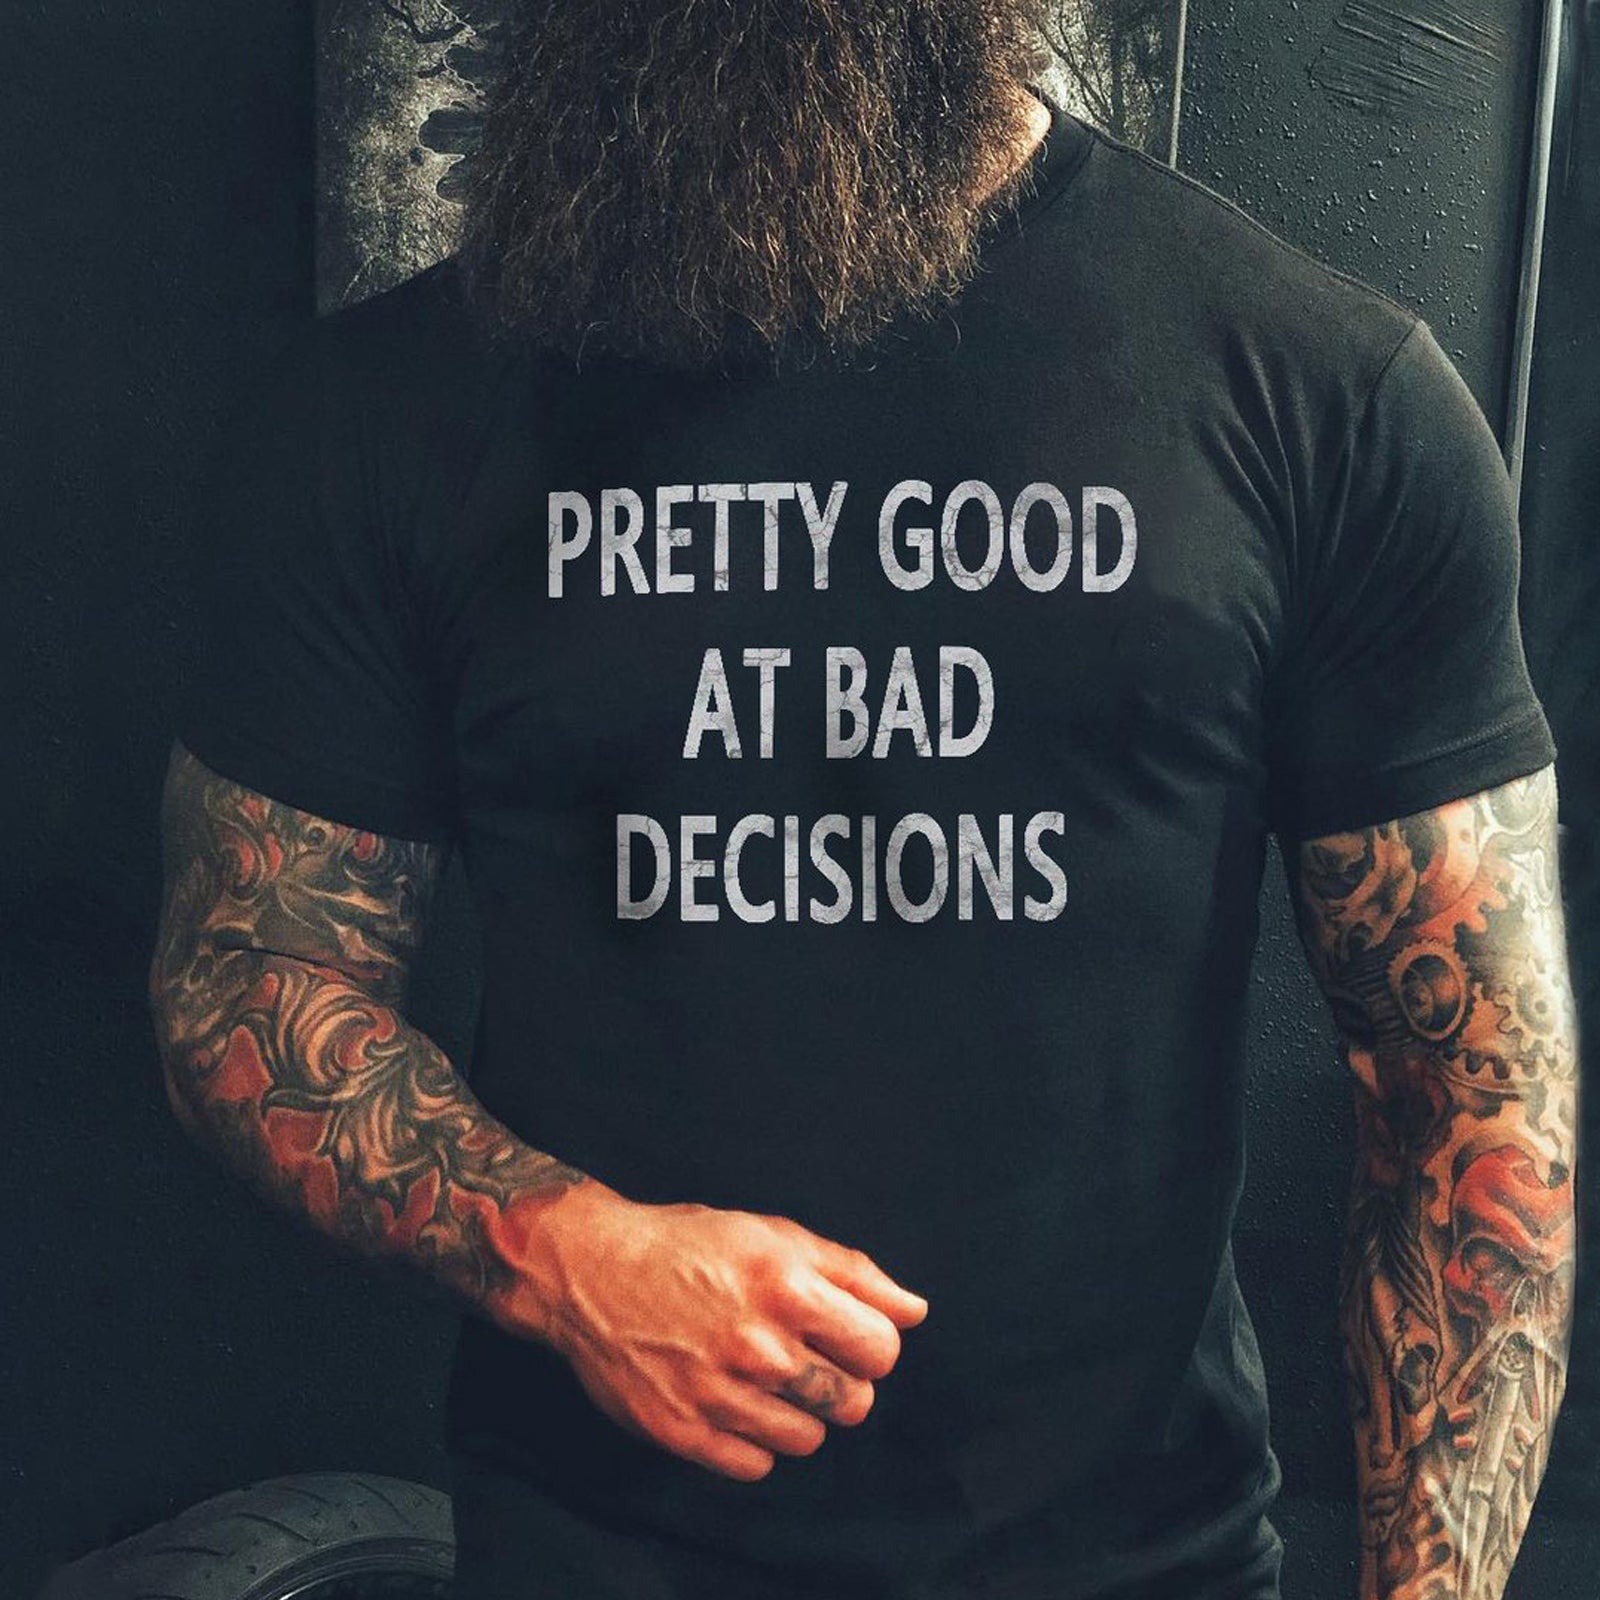 Livereid Pretty Good At Bad Decisions Letter Print T-Shirt - chicyea